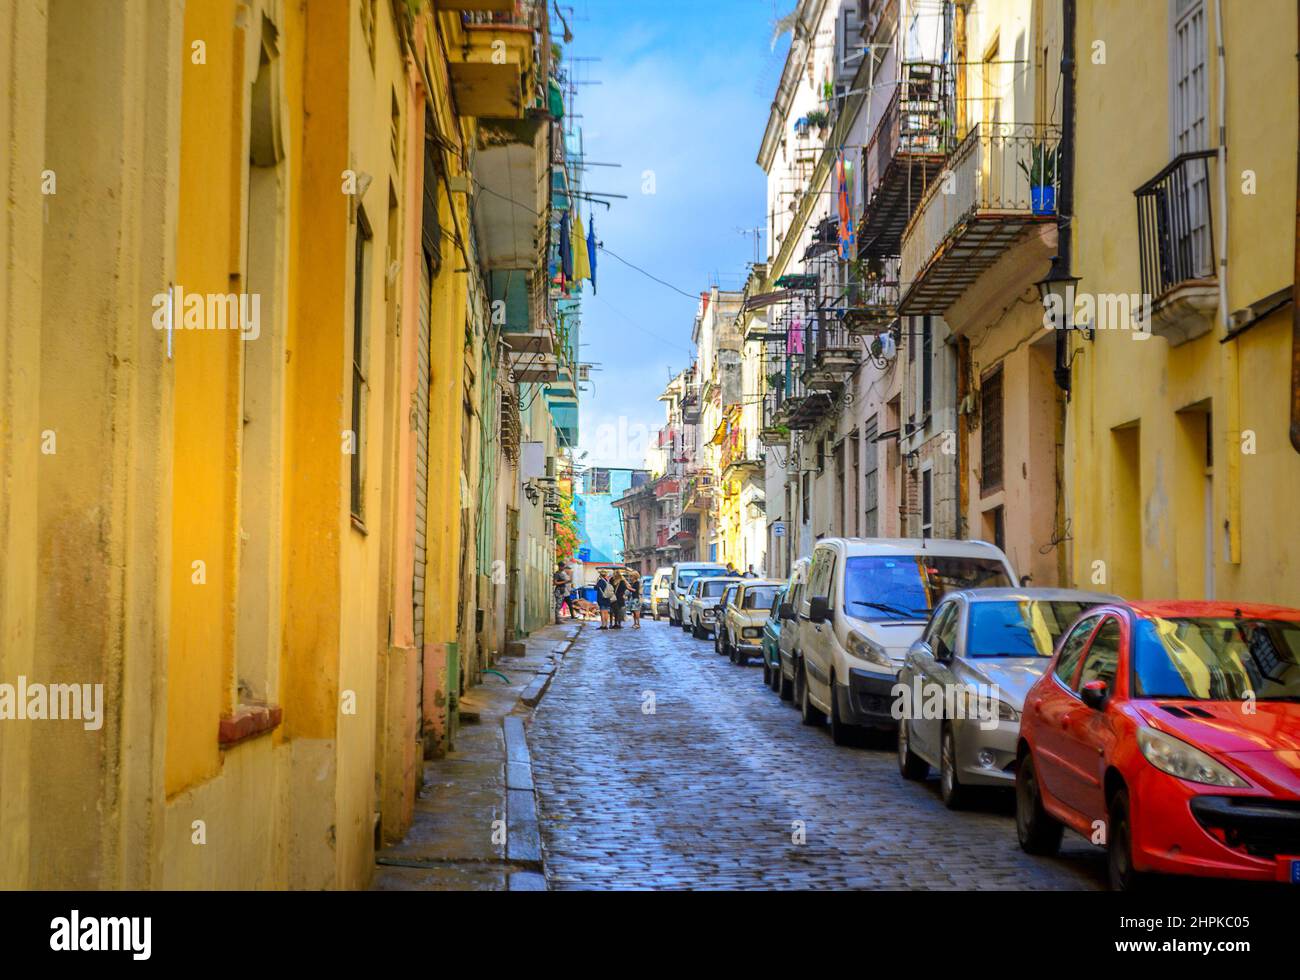 old street in the historic city of Havana, Cuba Stock Photo